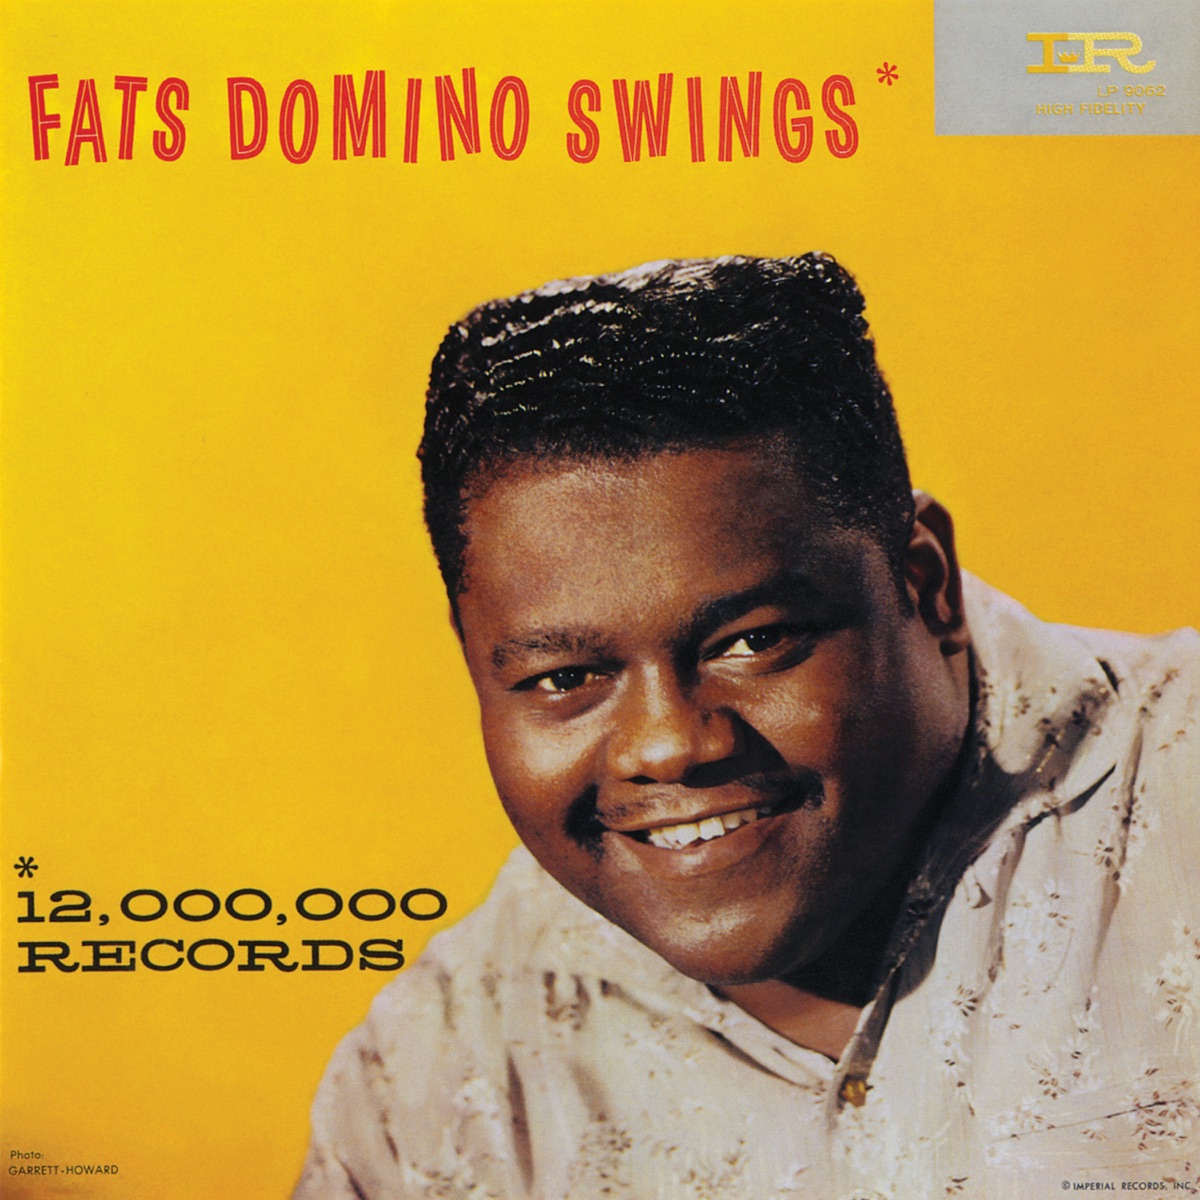 Fats Domino Swings - Album by Fats Domino - Apple Music